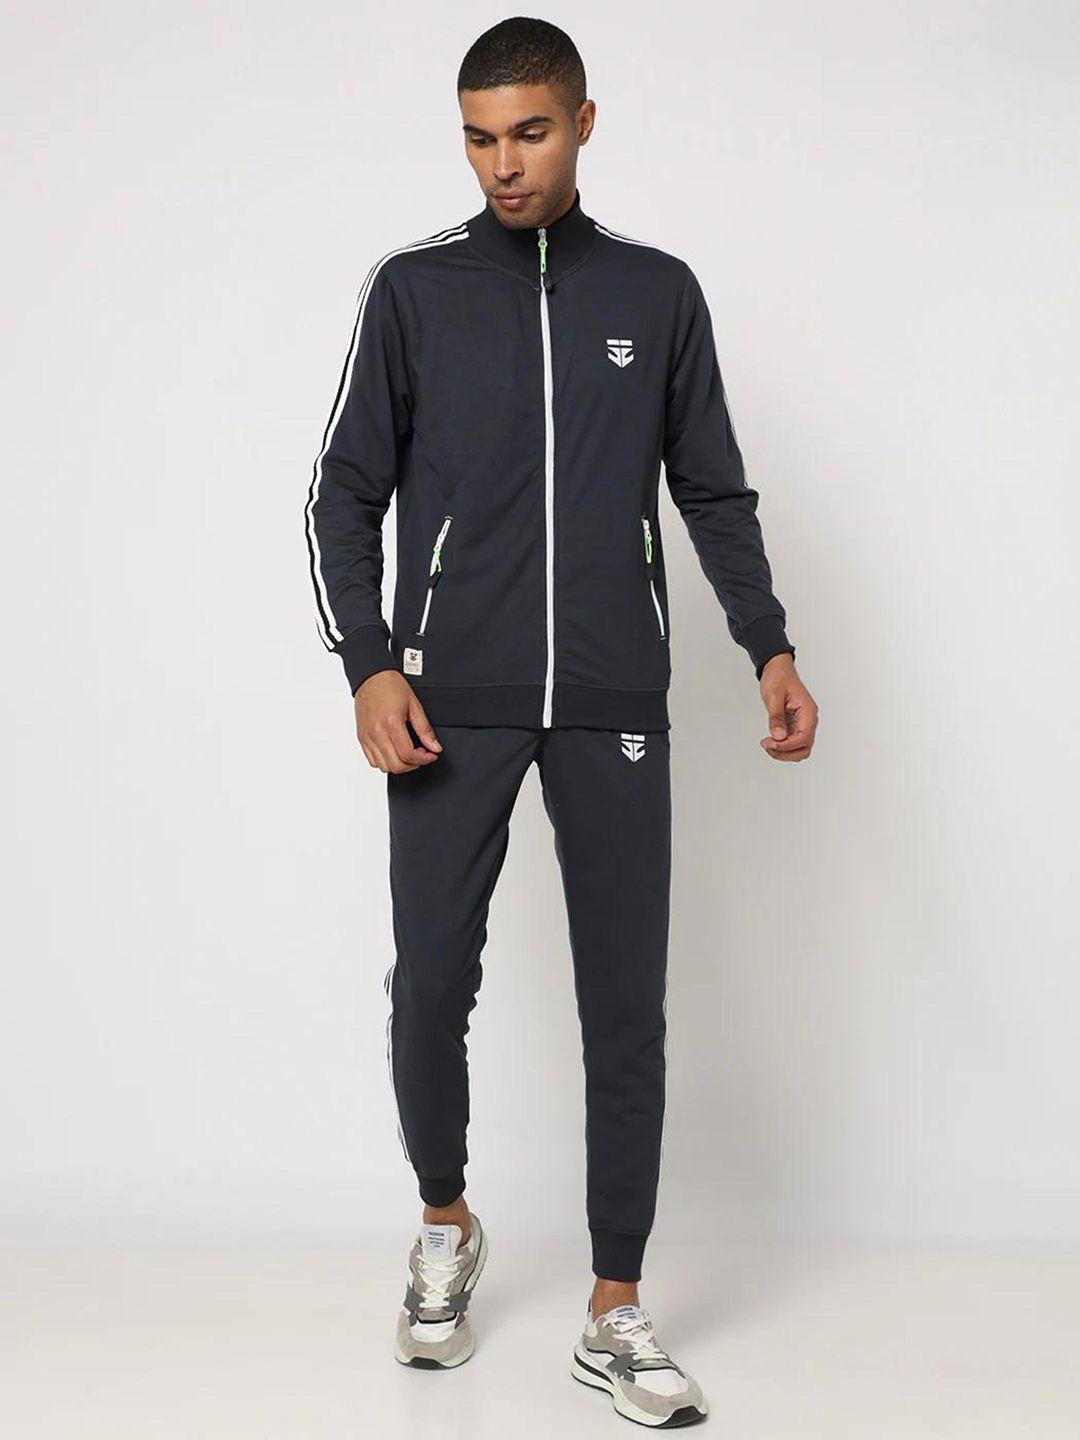 sports52 wear men dark grey brand logo printed pure cotton tracksuit